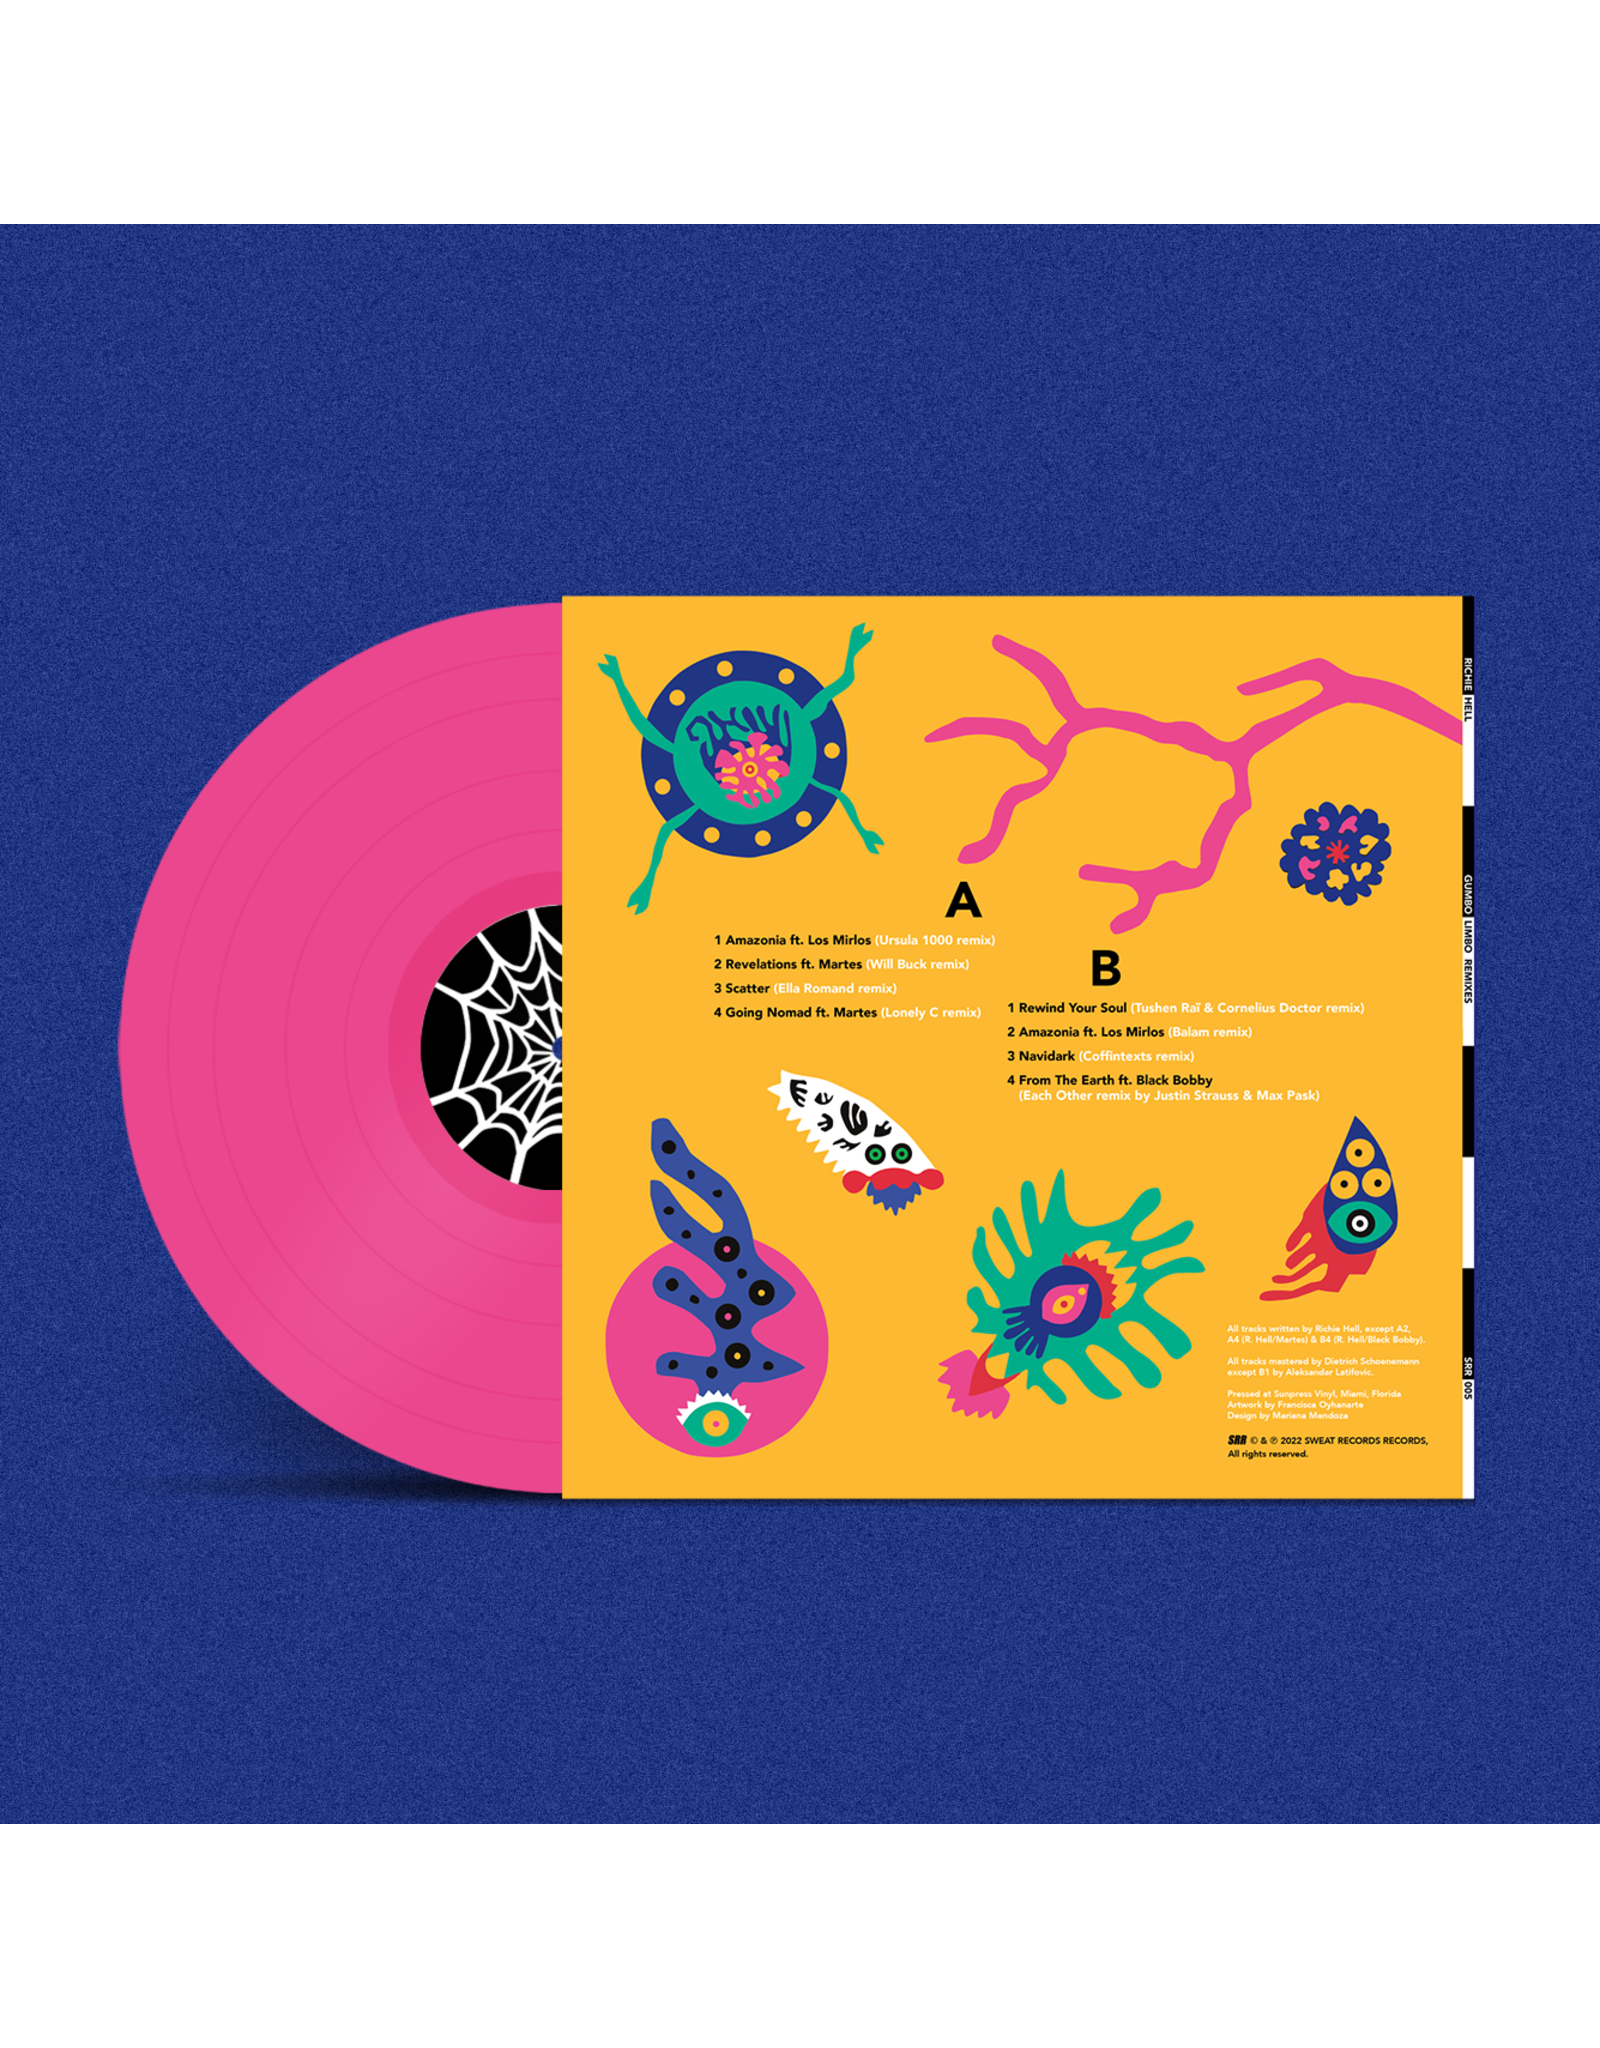 New Vinyl Richie Hell - Gumbo Limbo Remixes (Pink, Ltd Ed) LP